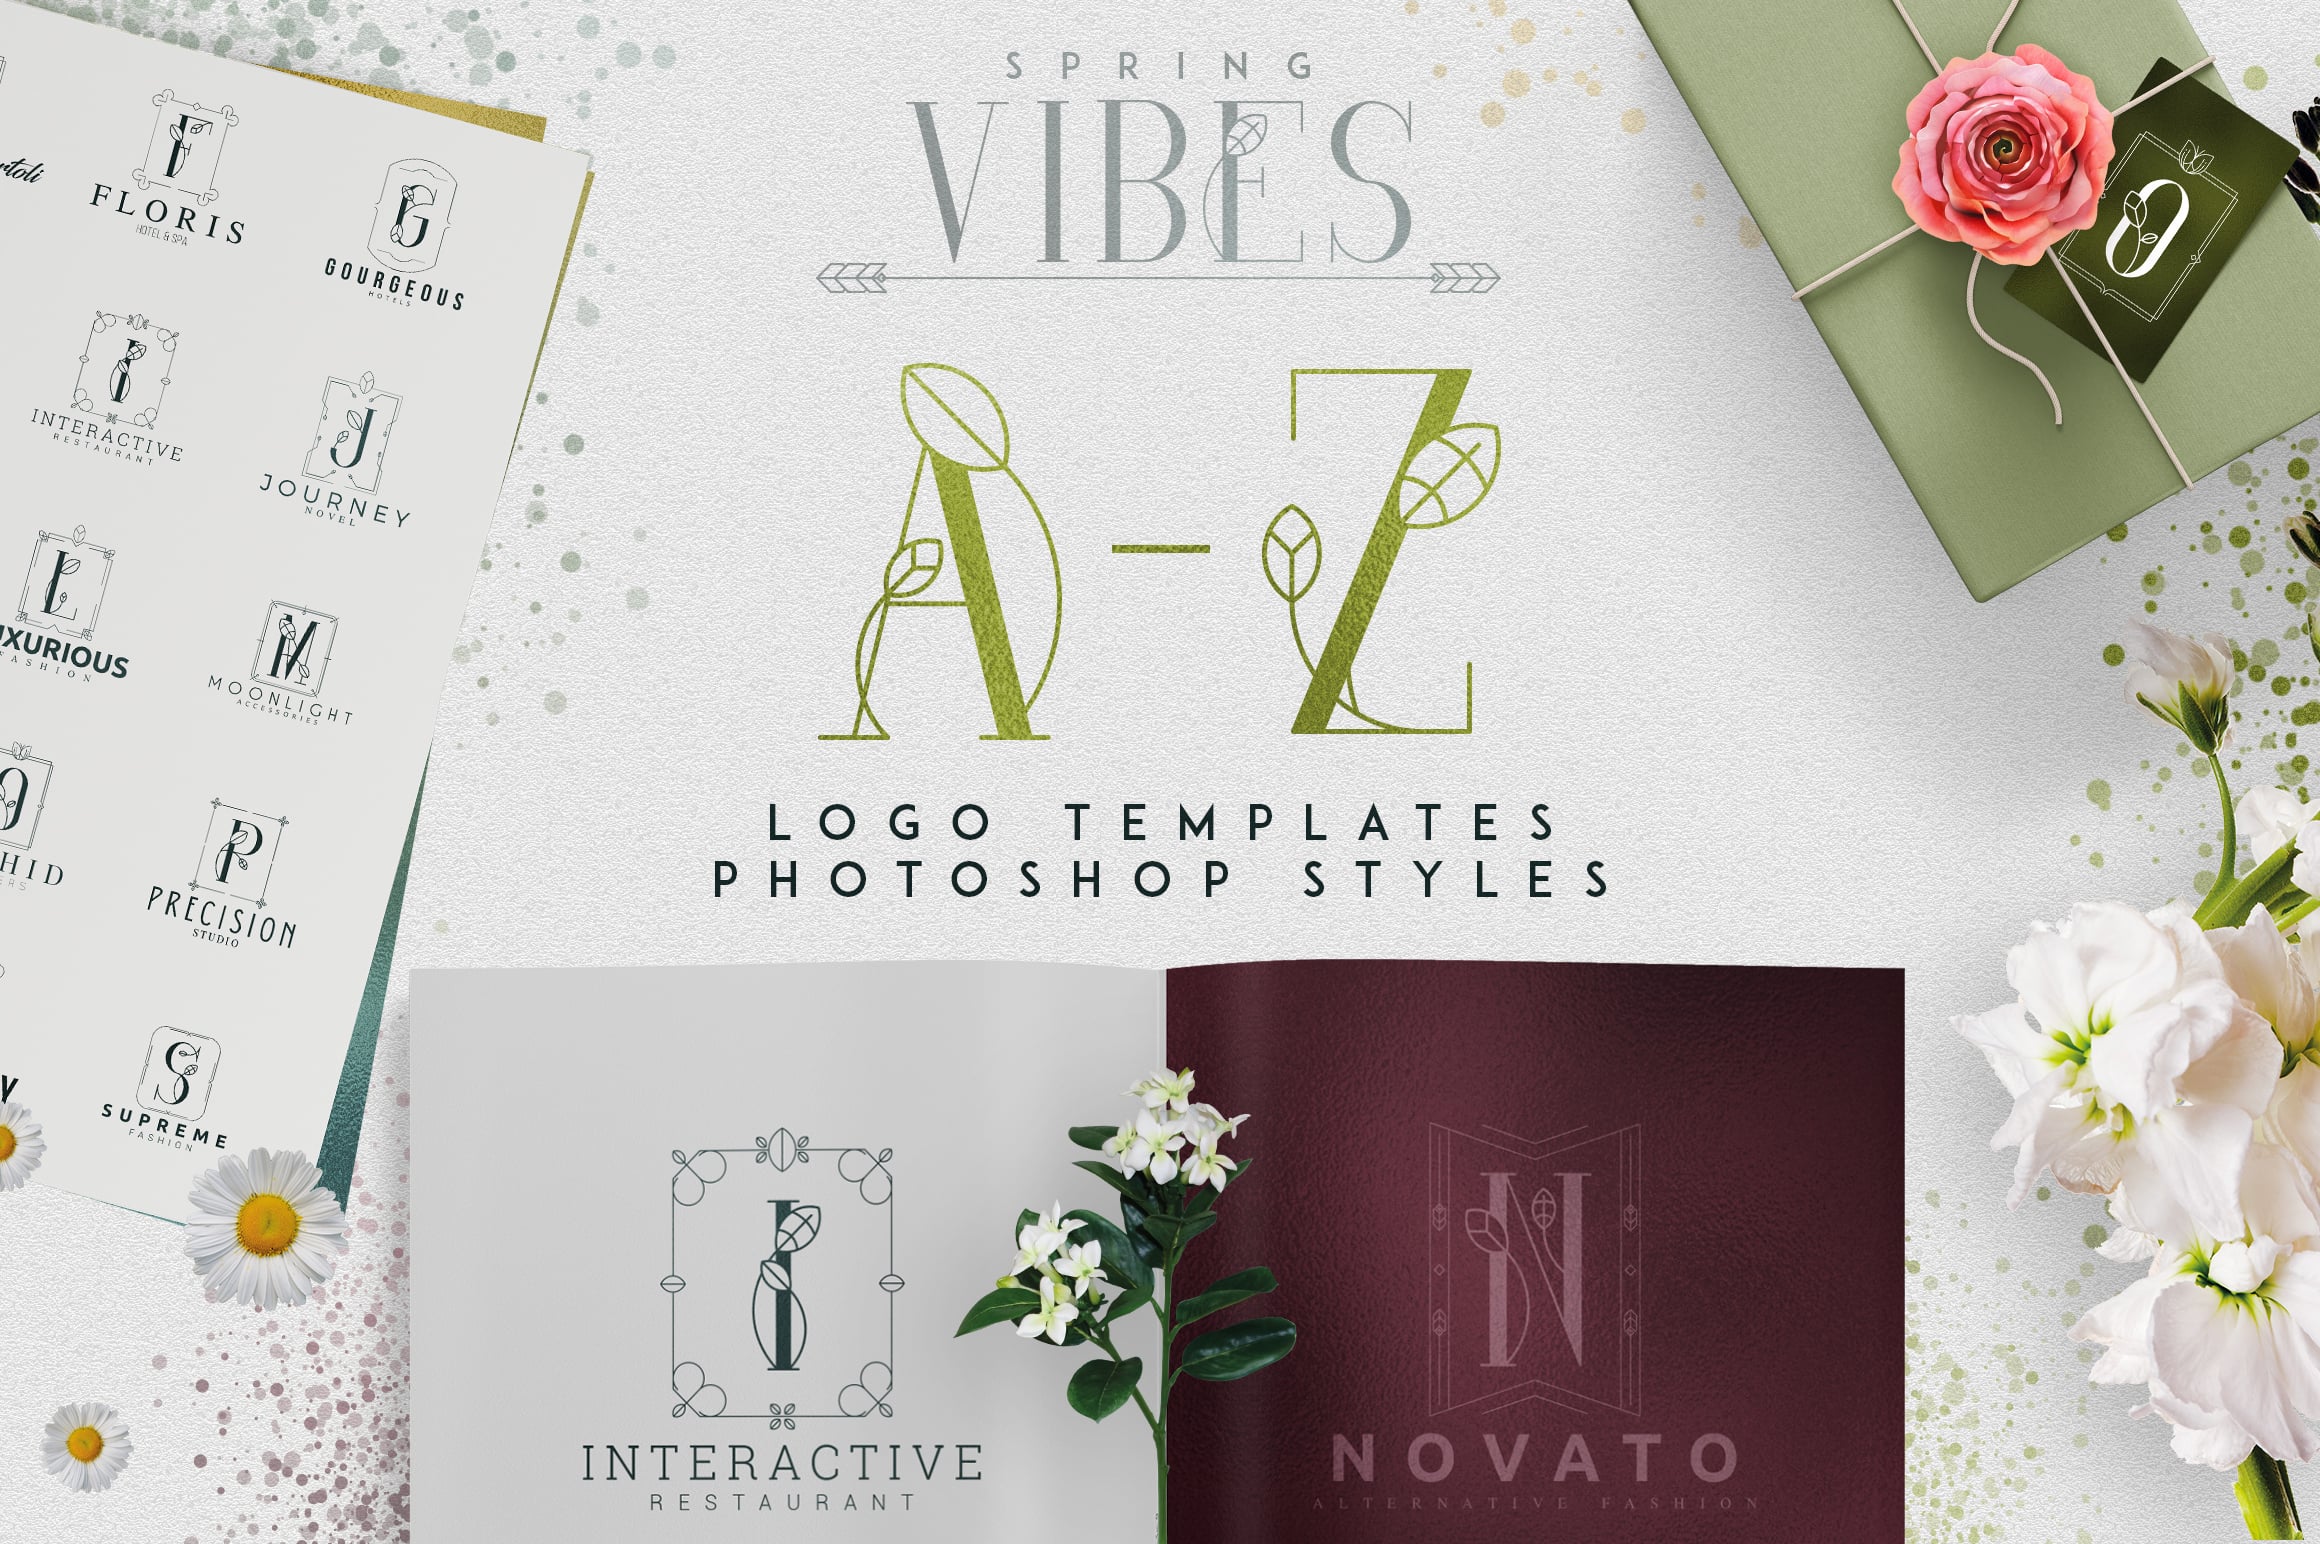 Spring Vibes: A-Z Logo Designs